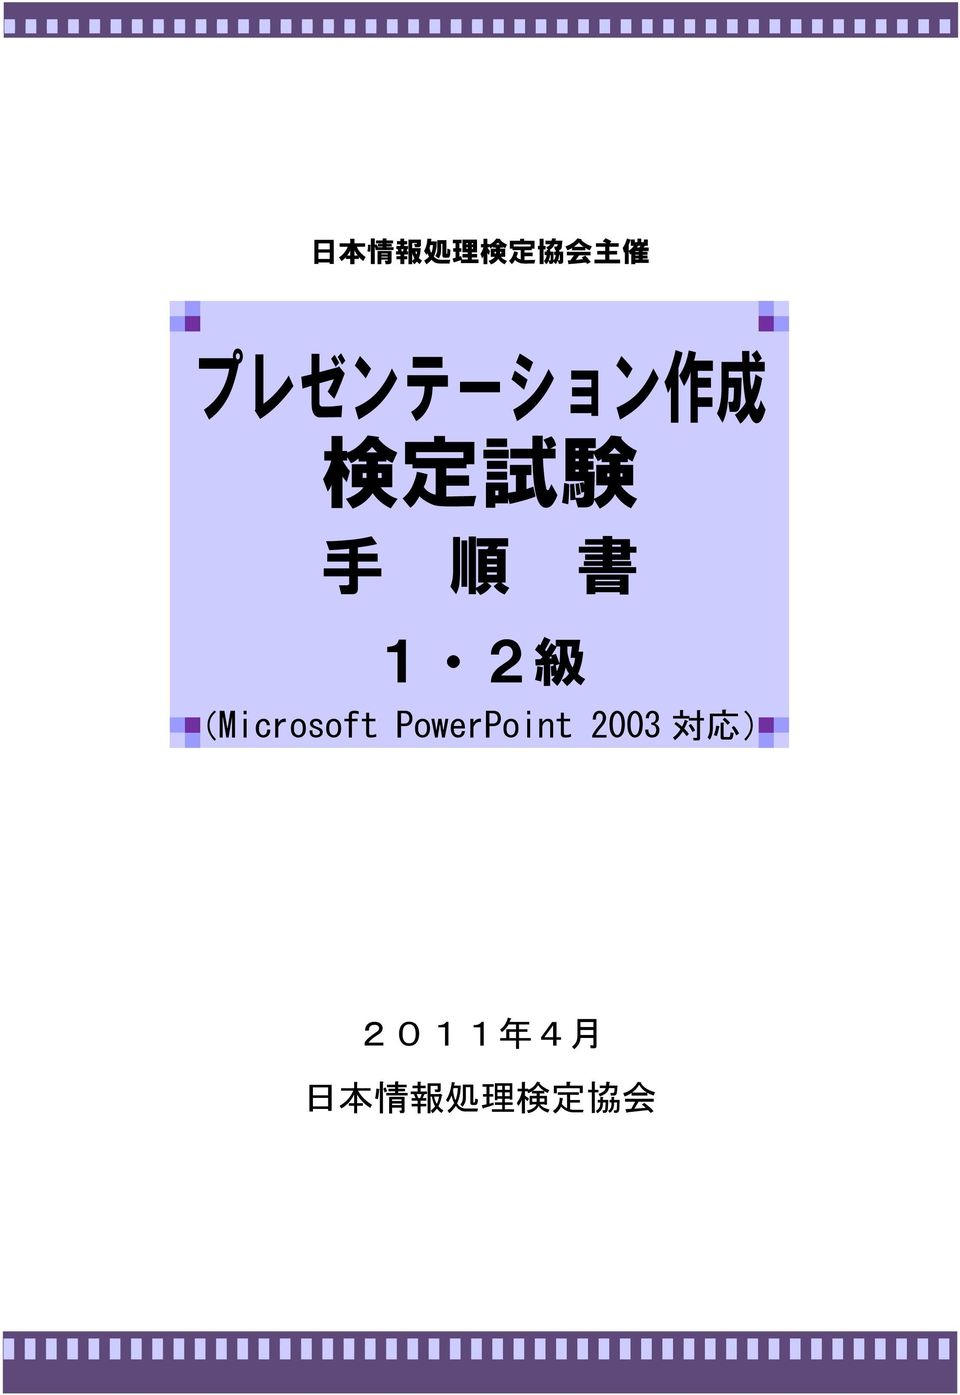 2 級 (Microsoft PowerPoint 2003